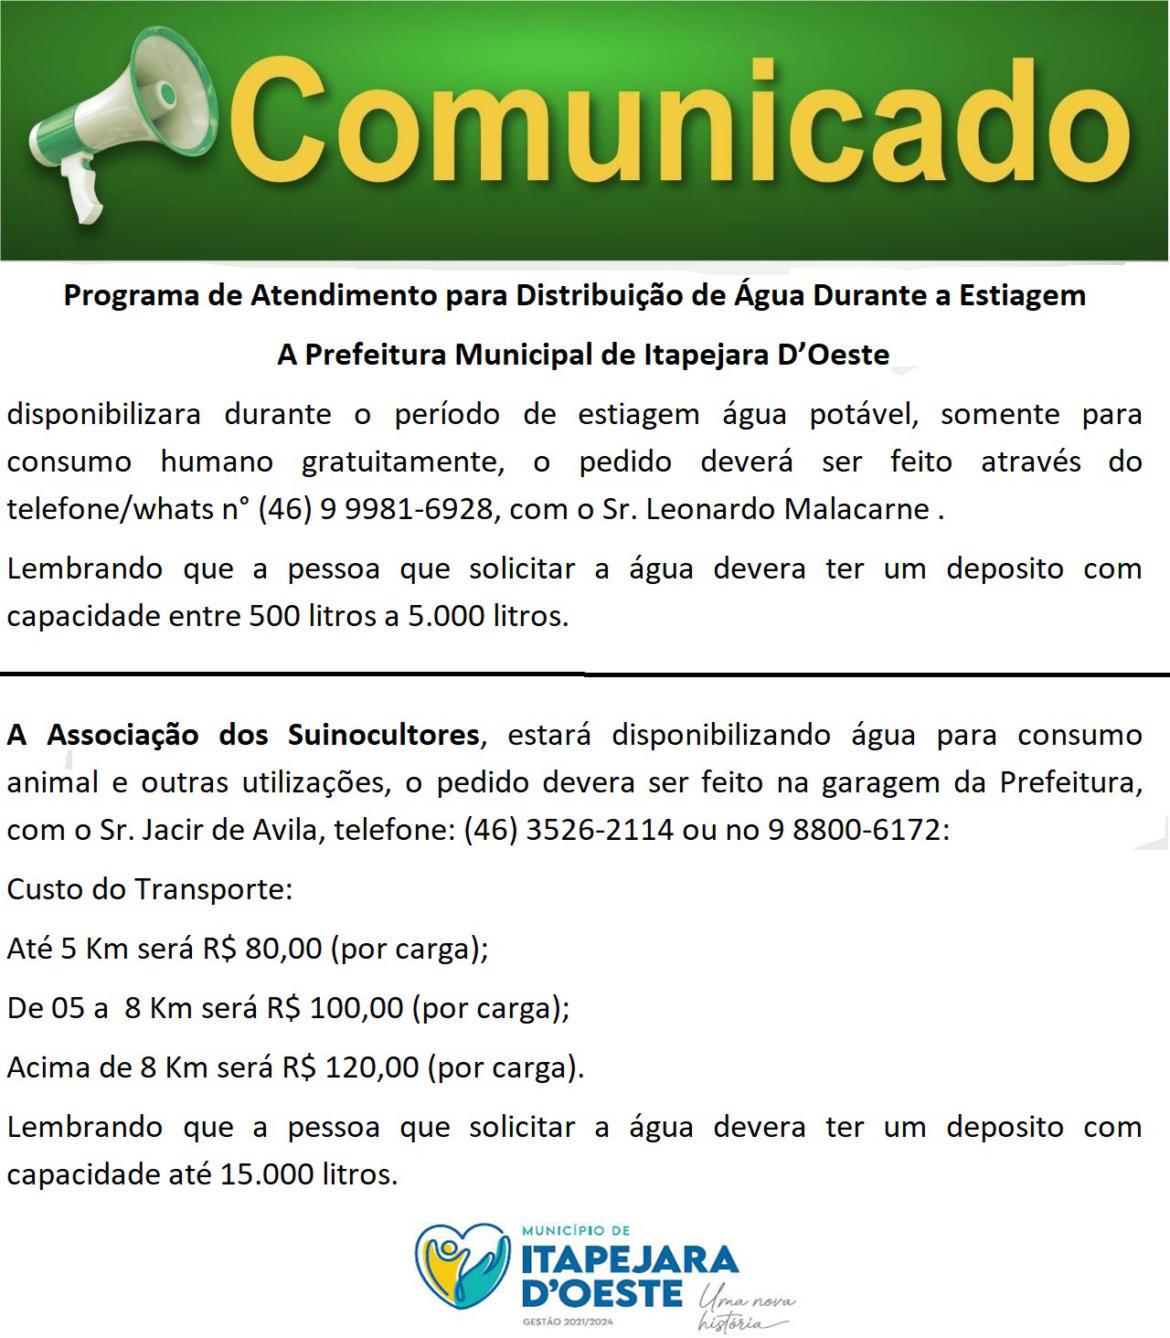 Prefeitura Municipal de Itaguaçu - BOLETIM INFORMATIVO CORONAVÍRUS Nº 178 -  31/10/2020